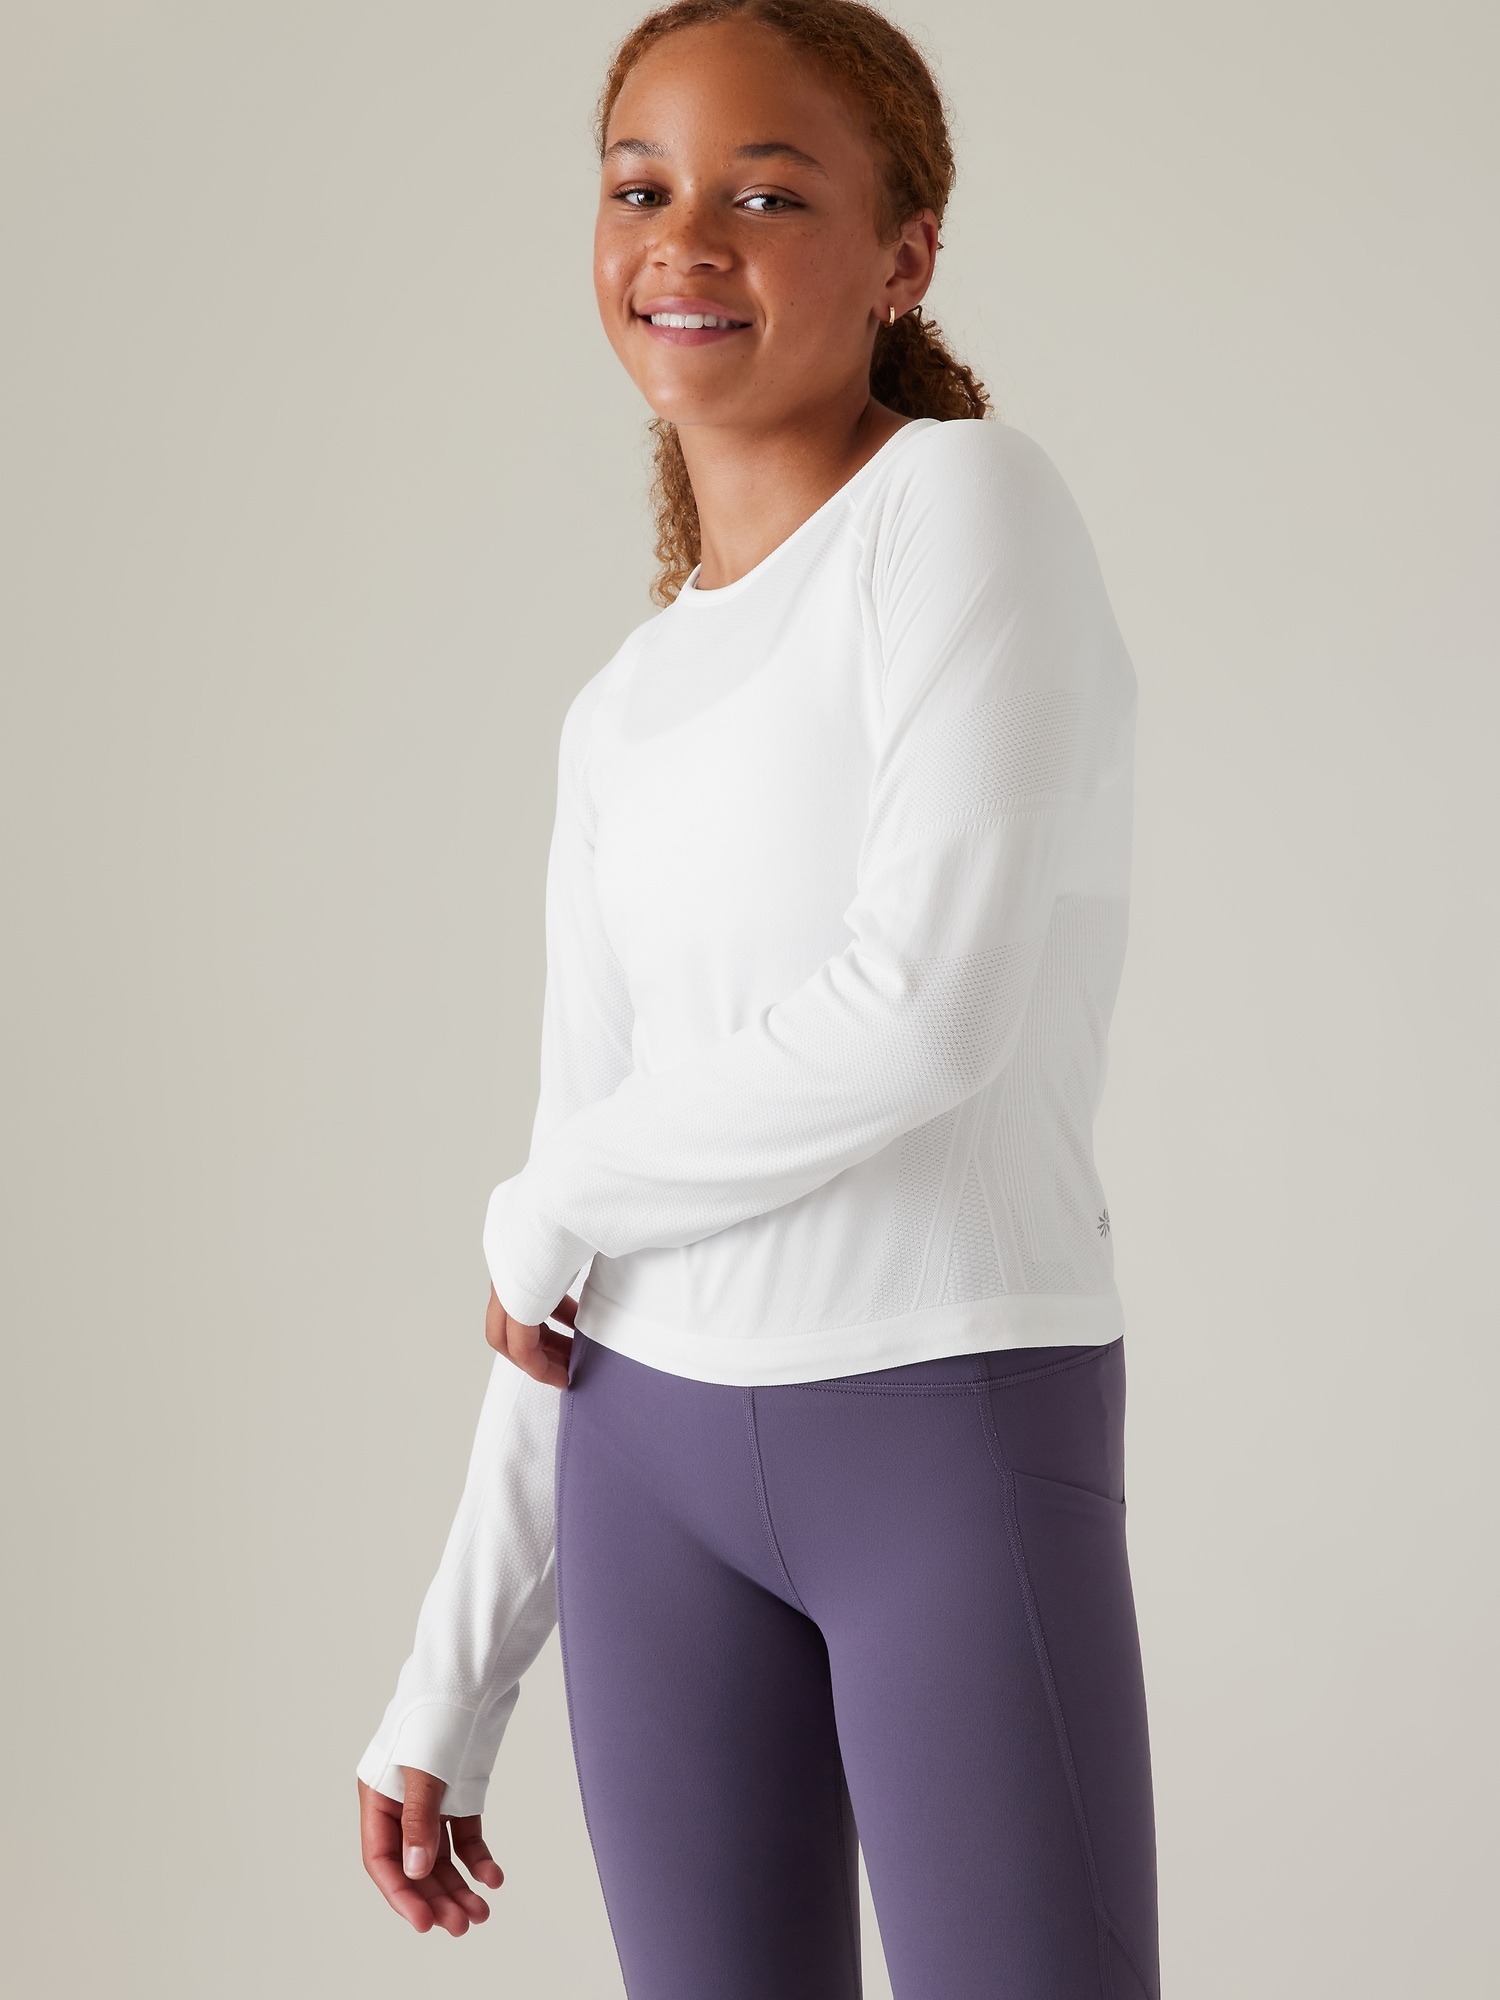 Athleta Athletic Yoga Pants Women's Size Medium 